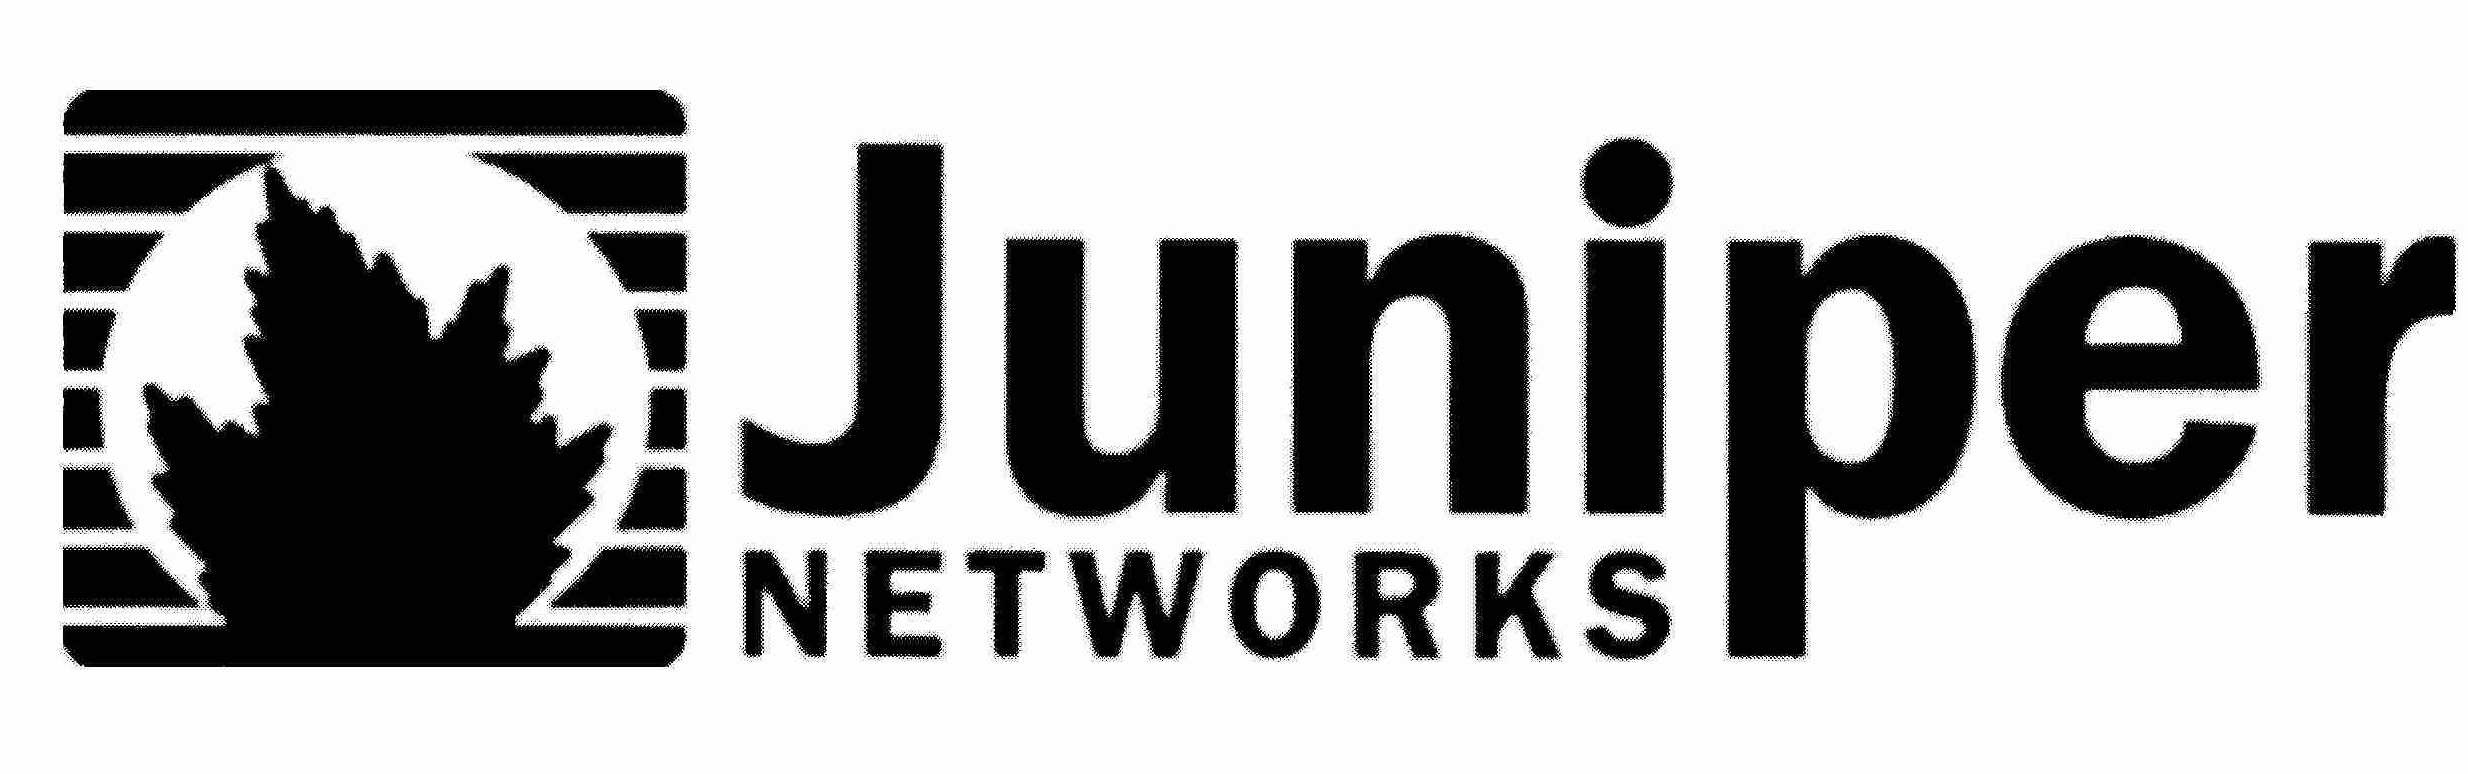 JUNIPER NETWORKS